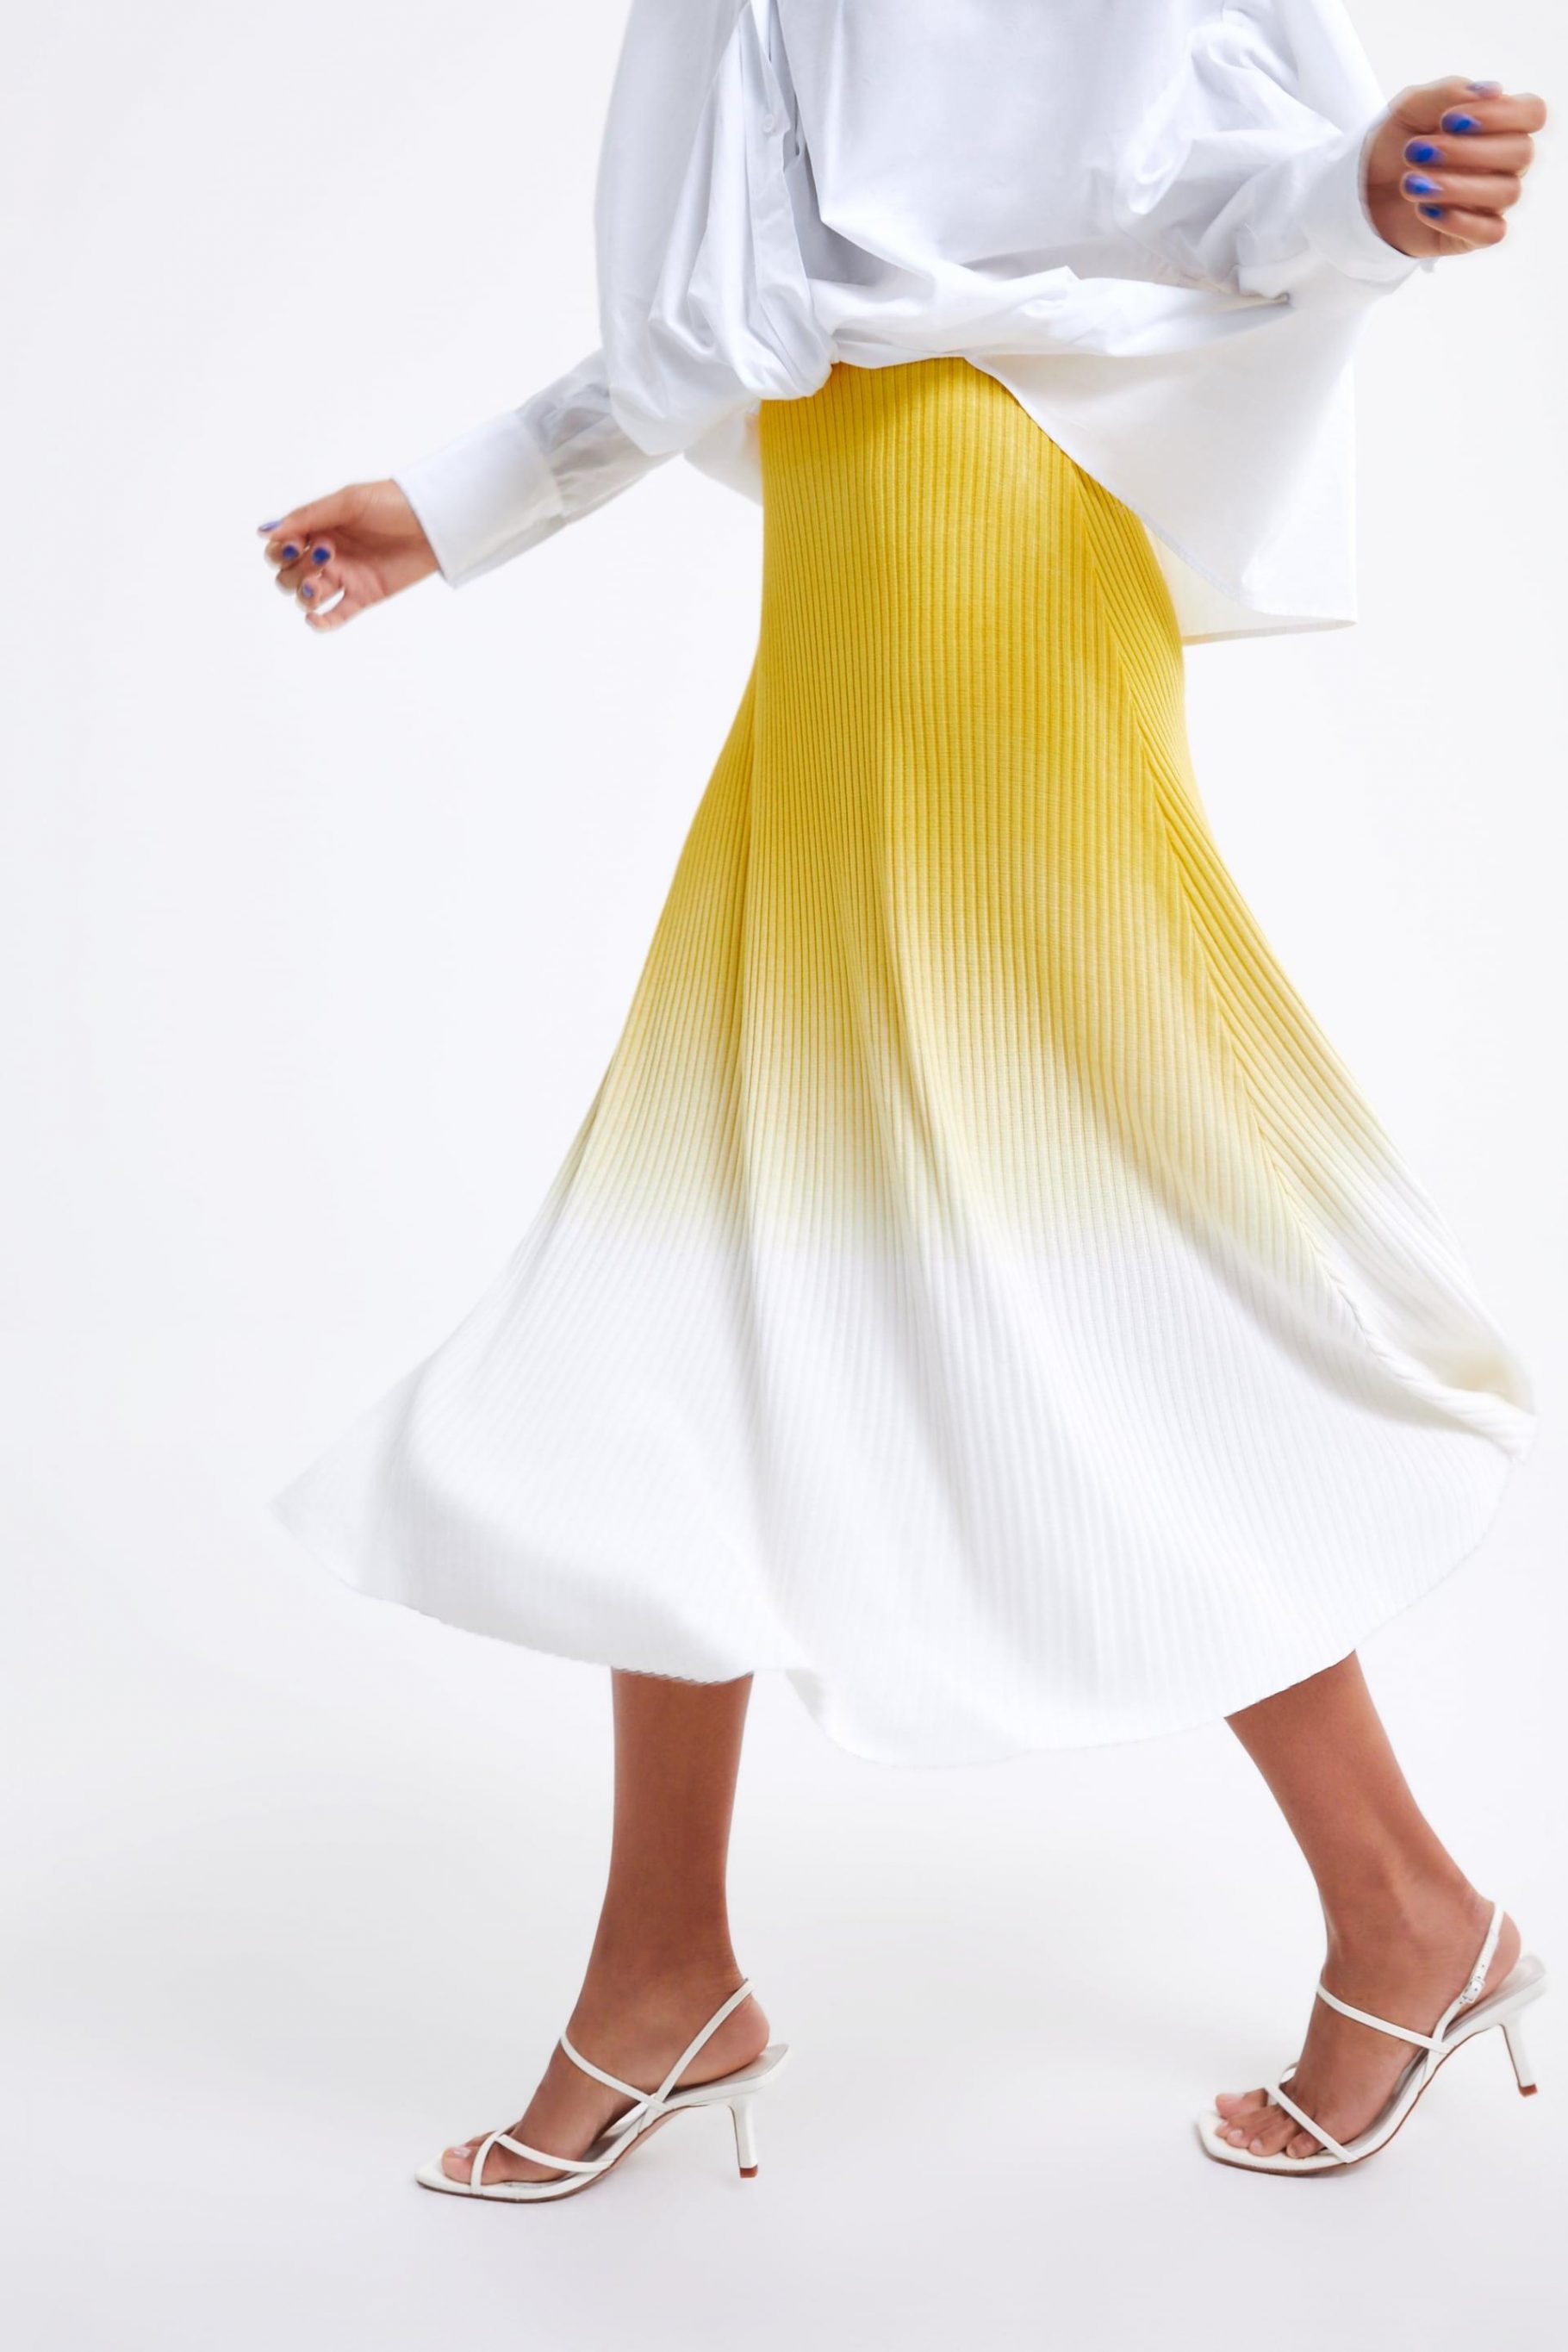 How to Wear Pastels 2019 Updated | Ombre Pastel Midi Skirt |www.kittyandb.com #YellowMidiSkirt #YellowandWhite #Chic #Pastel #Skirt #OutfitInspiration